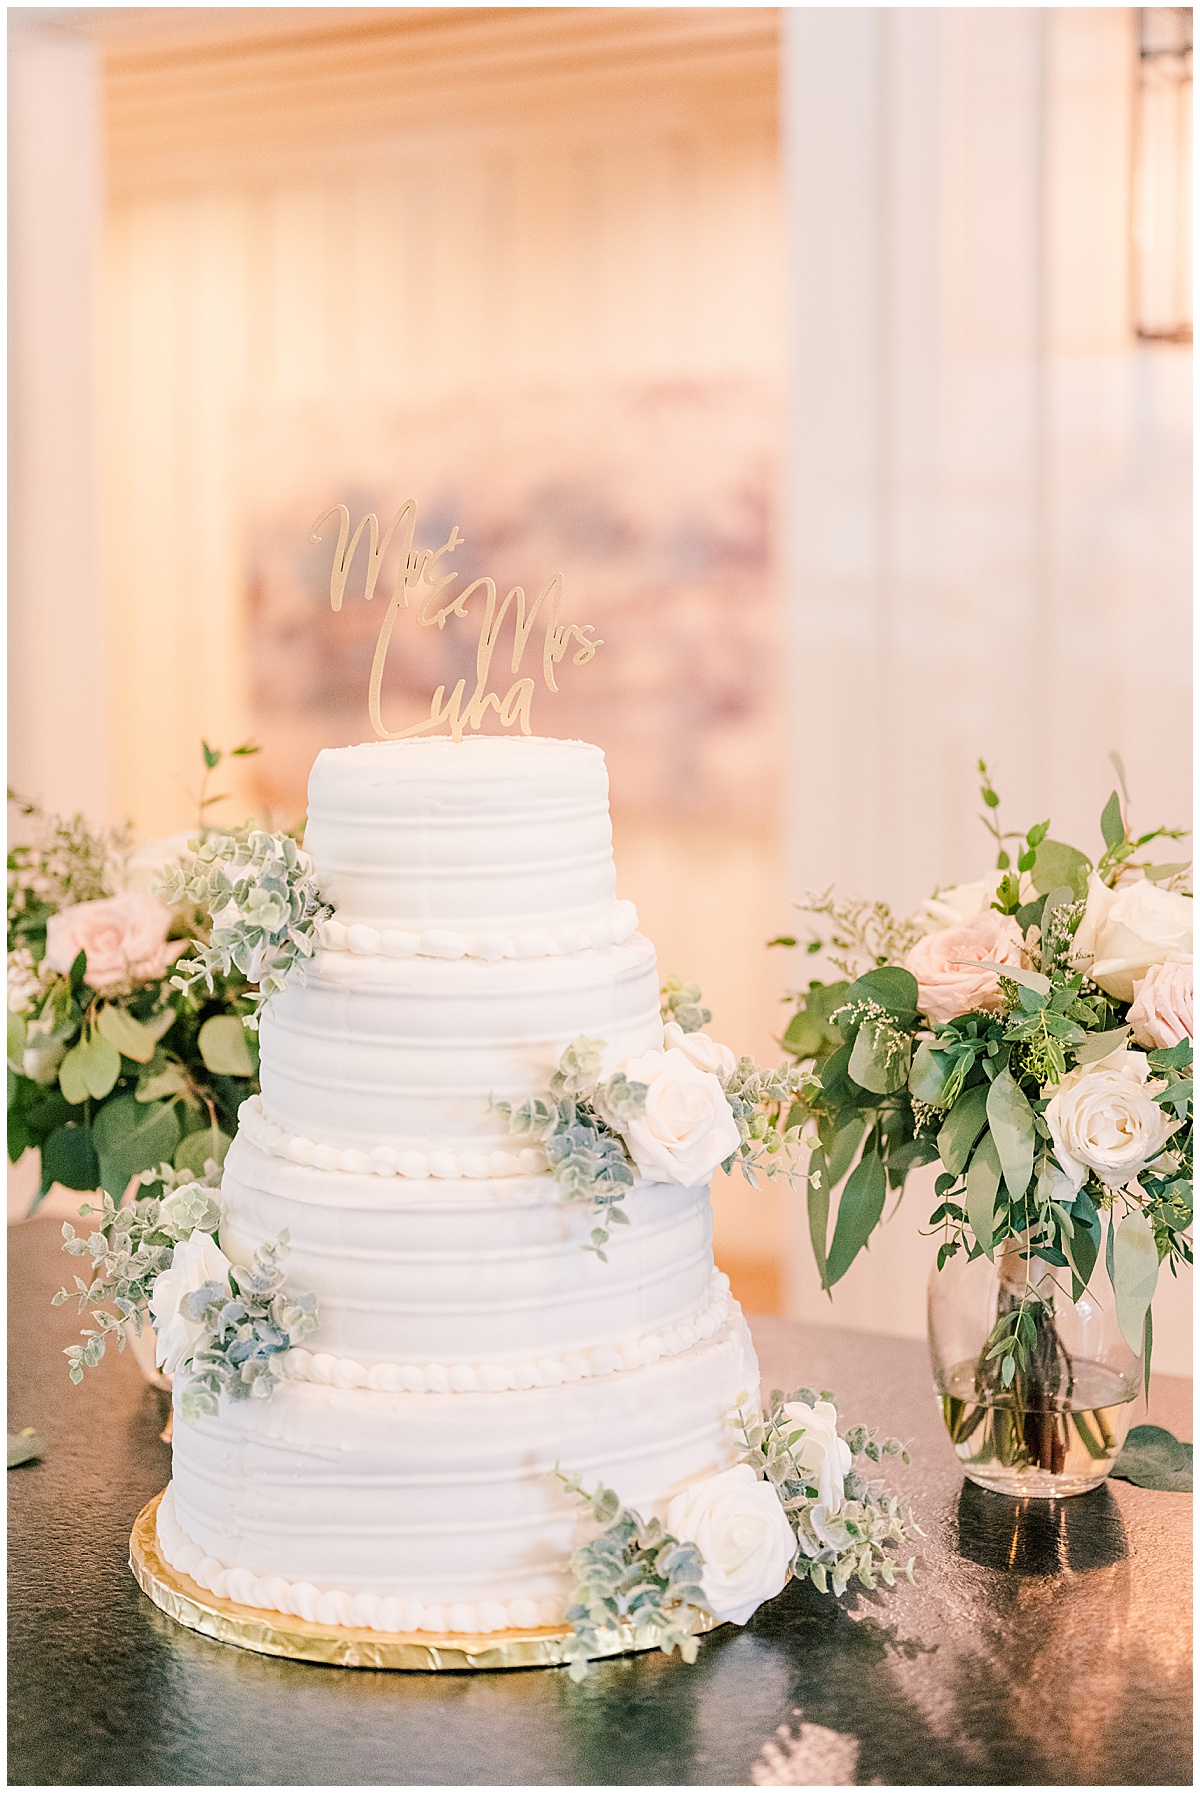 Wedding Cake, The Woodlands Texas Photographer.